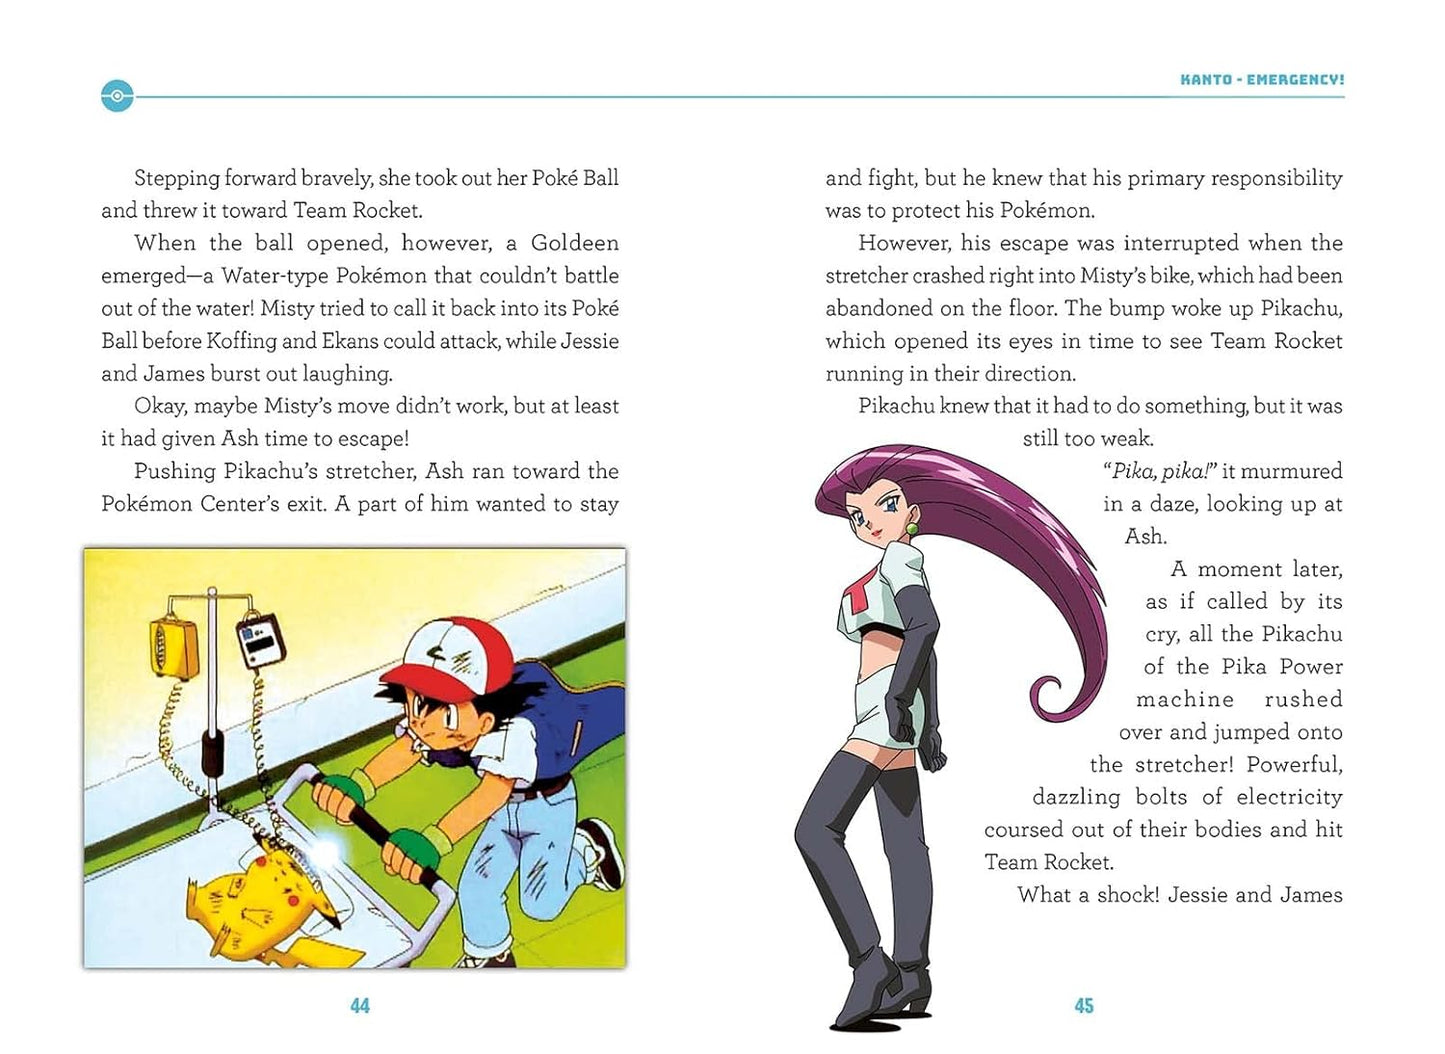 Book (Paperback) - Pokémon: Ash & Pikachu's Adventures